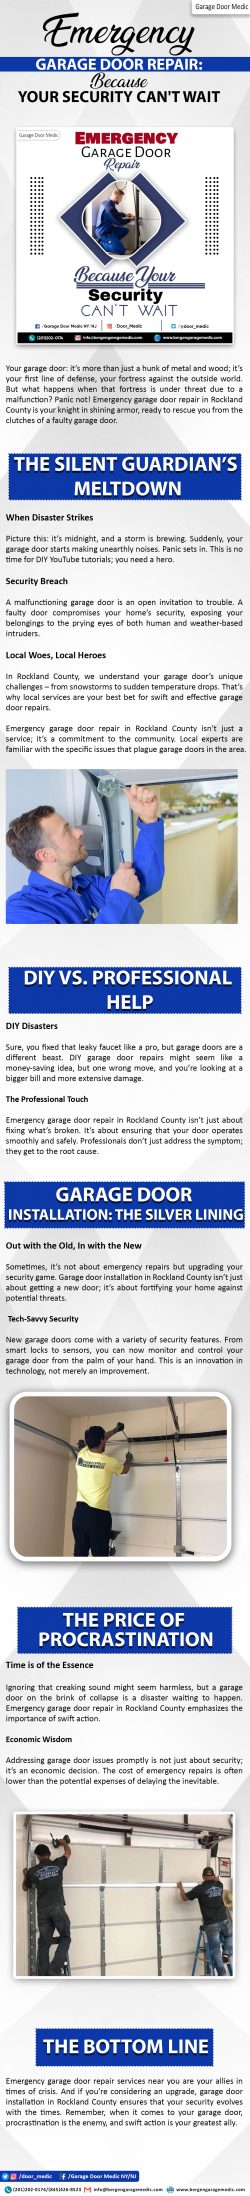 Emergency Garage Door Repair: Because Your Security Can’t Wait